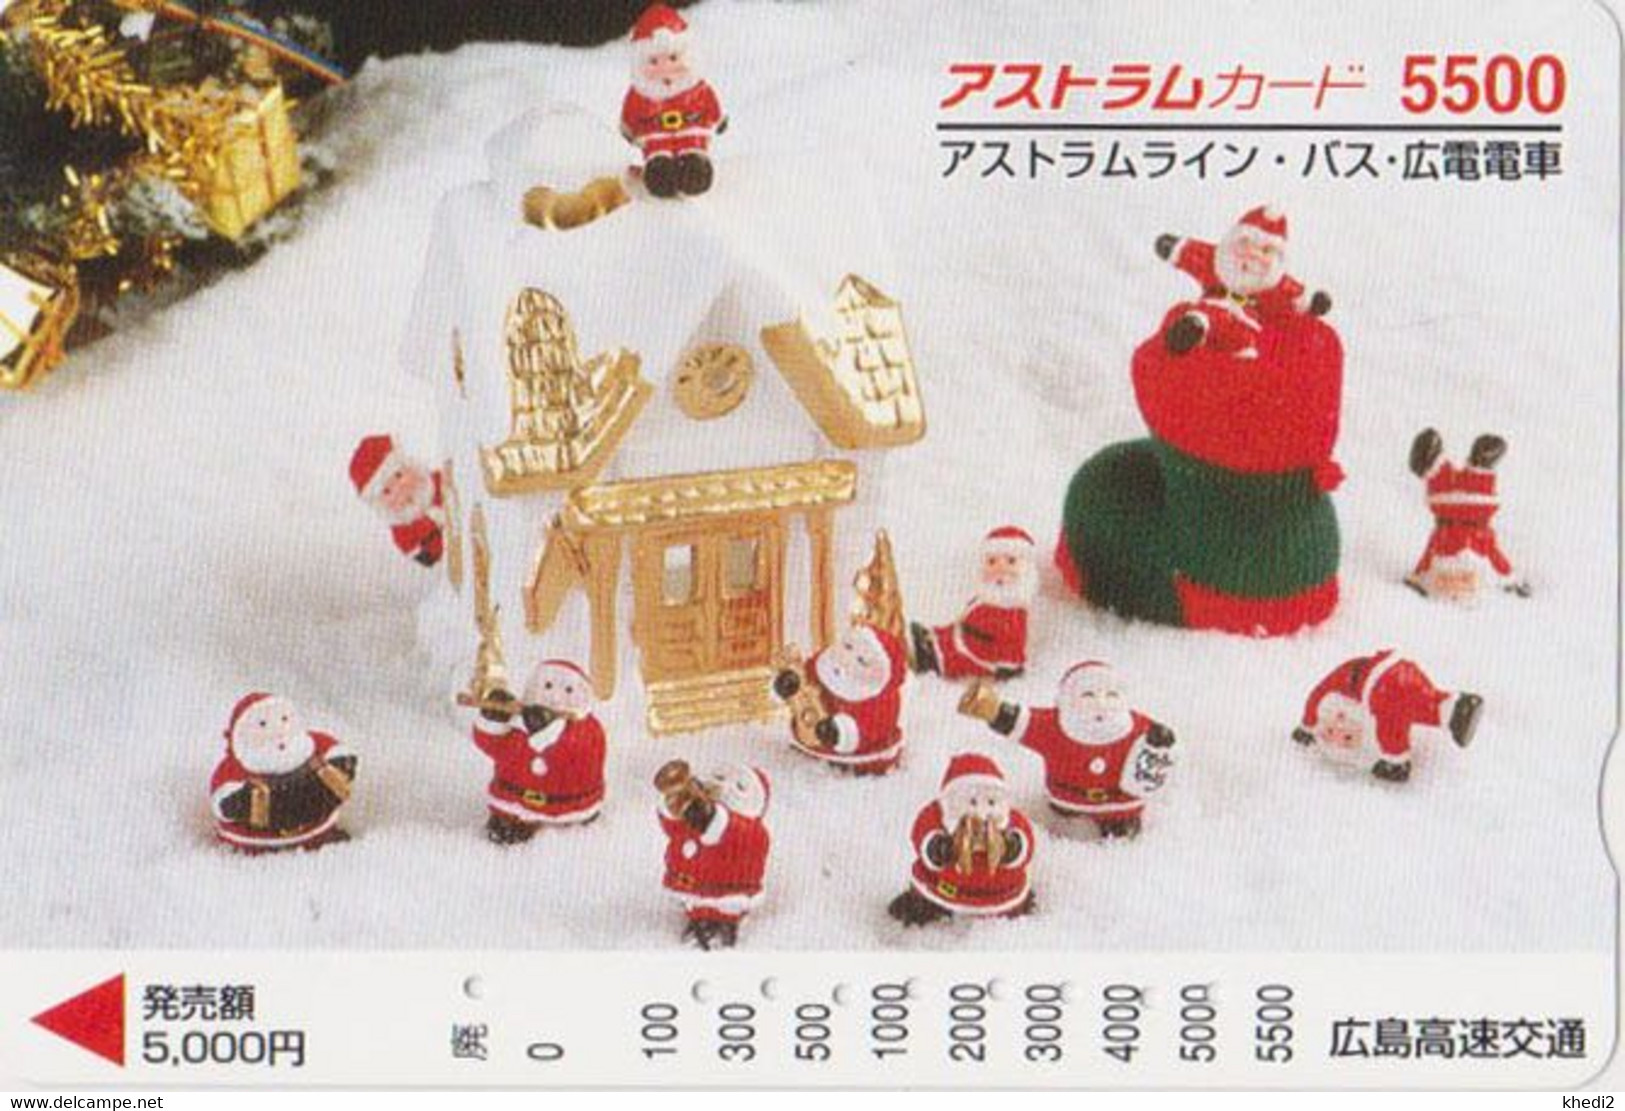 Carte JAPON - PERE NOEL Musique - CHRISTMAS Santa Claus Music JAPAN Prepaid Bus Card - WEIHNACHTEN  - FR  207 - Noel